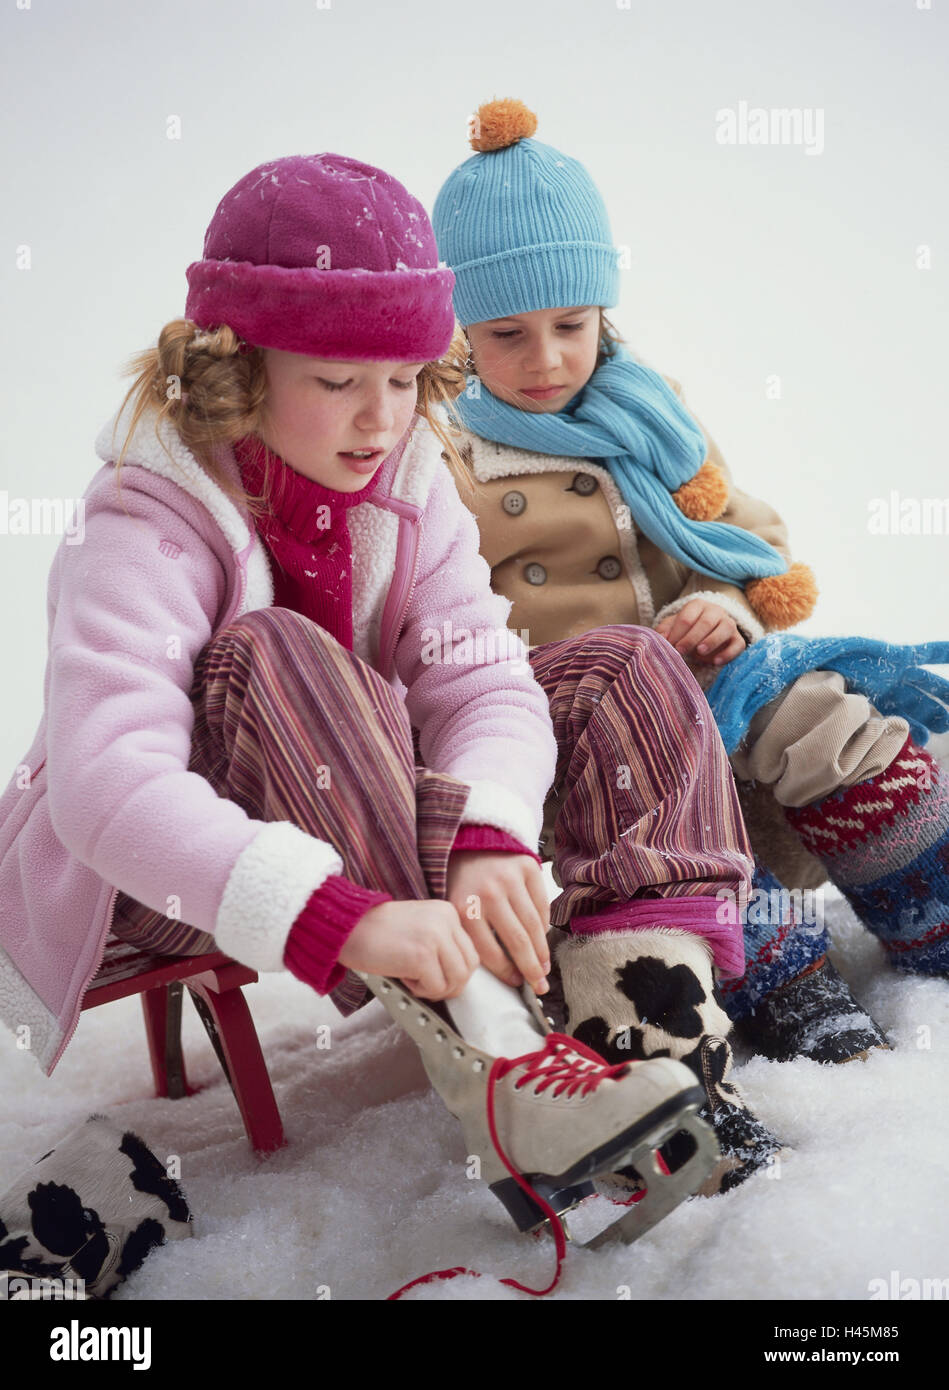 Girls, ice skates, boy, accelerate, watch, sit, sleigh, winter, Stock Photo